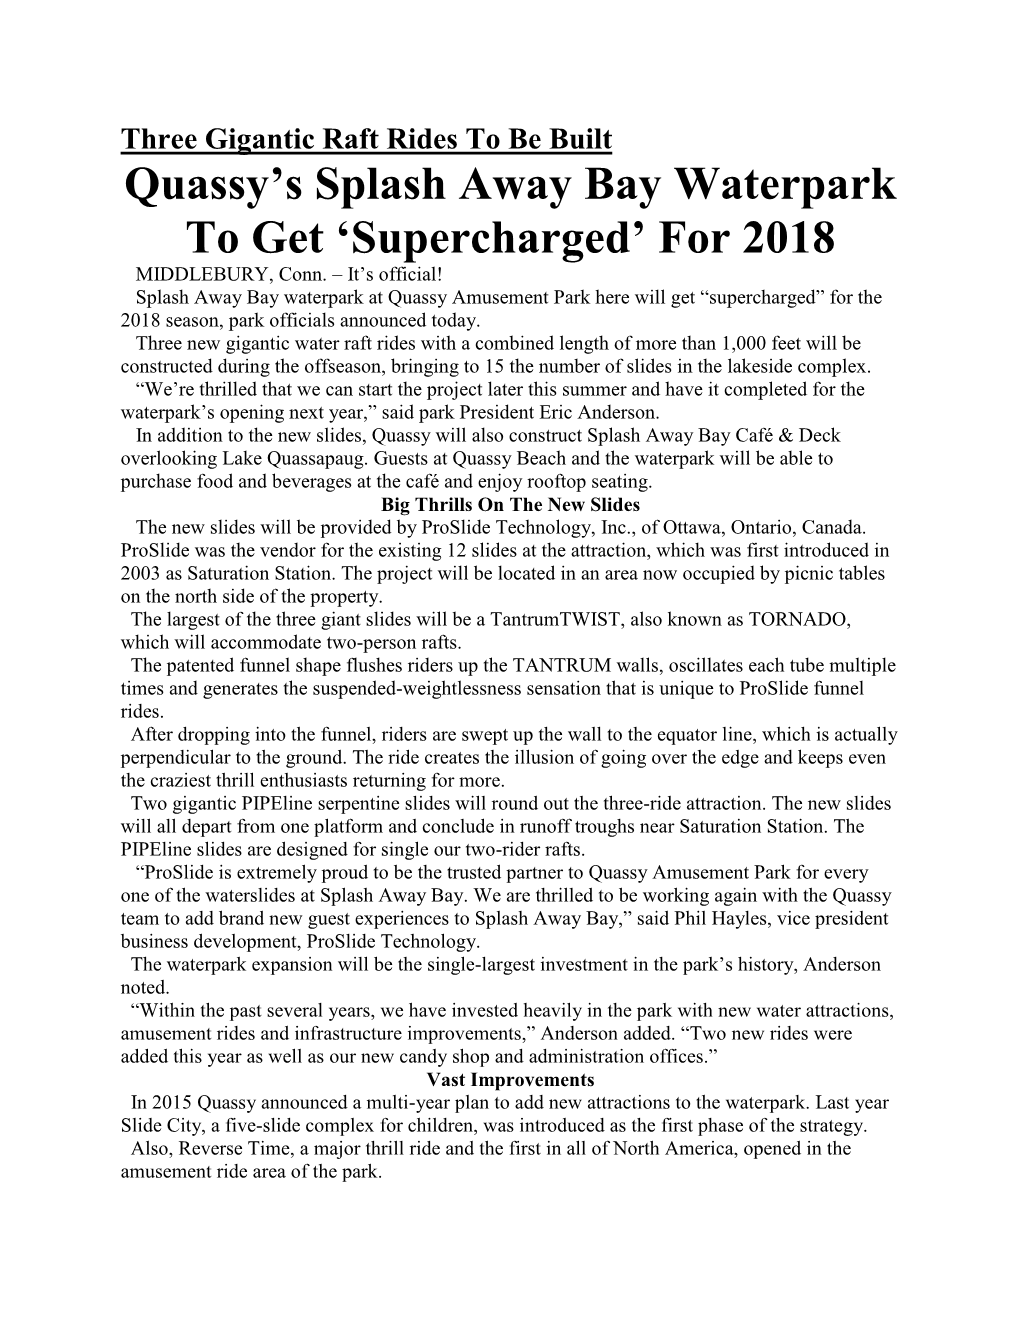 Quassy's Splash Away Bay Waterpark To